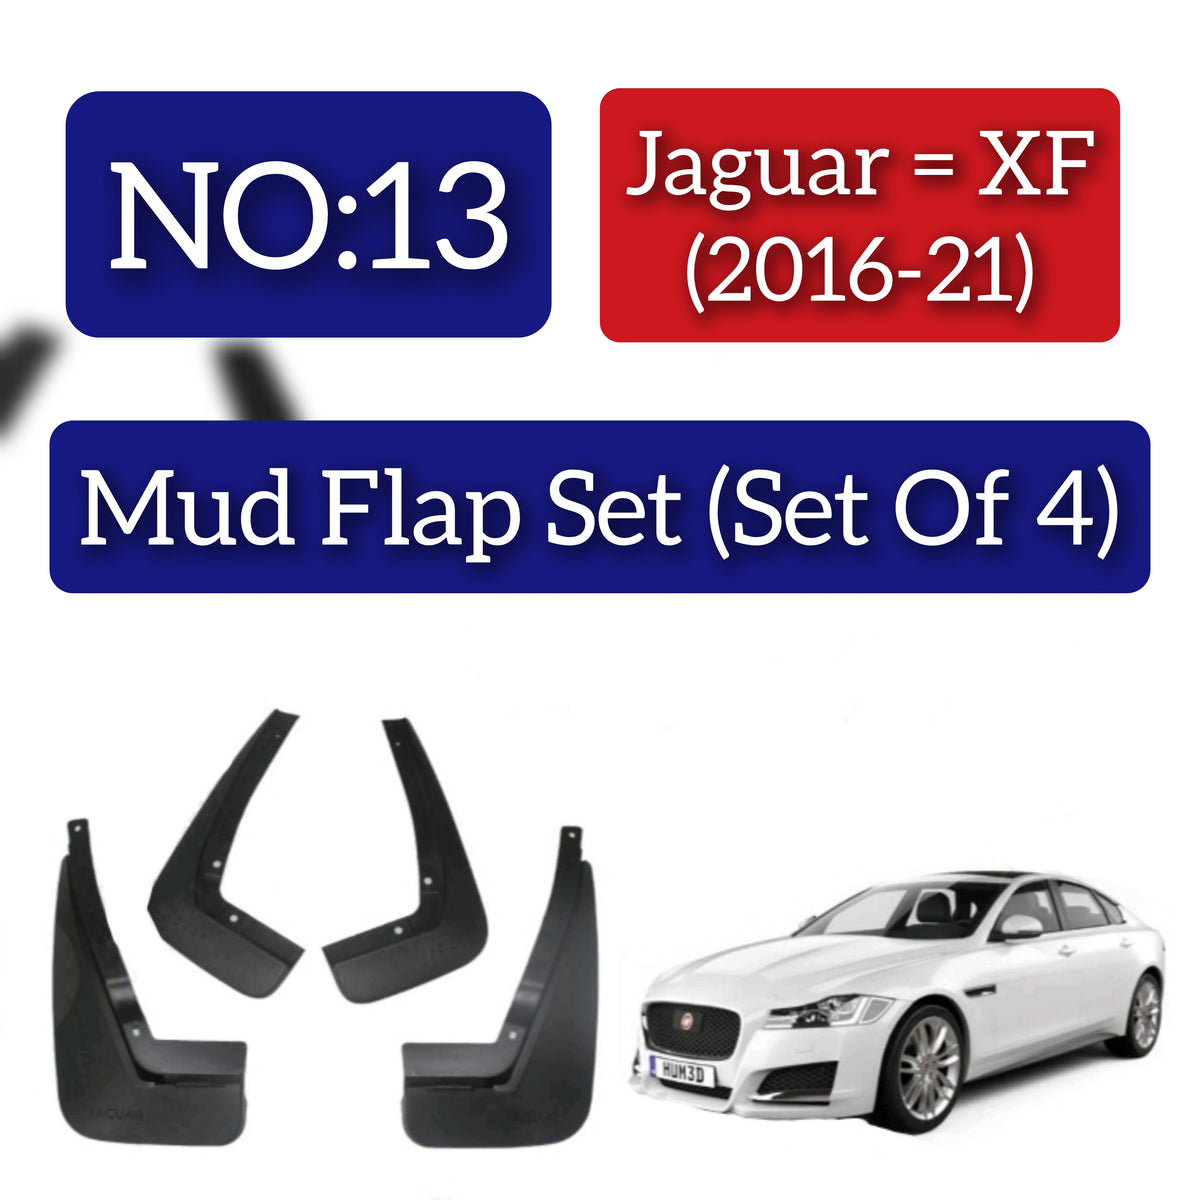 Jaguar = XF (2016-21) Mud Flap Set (Set of 4) Tag 13